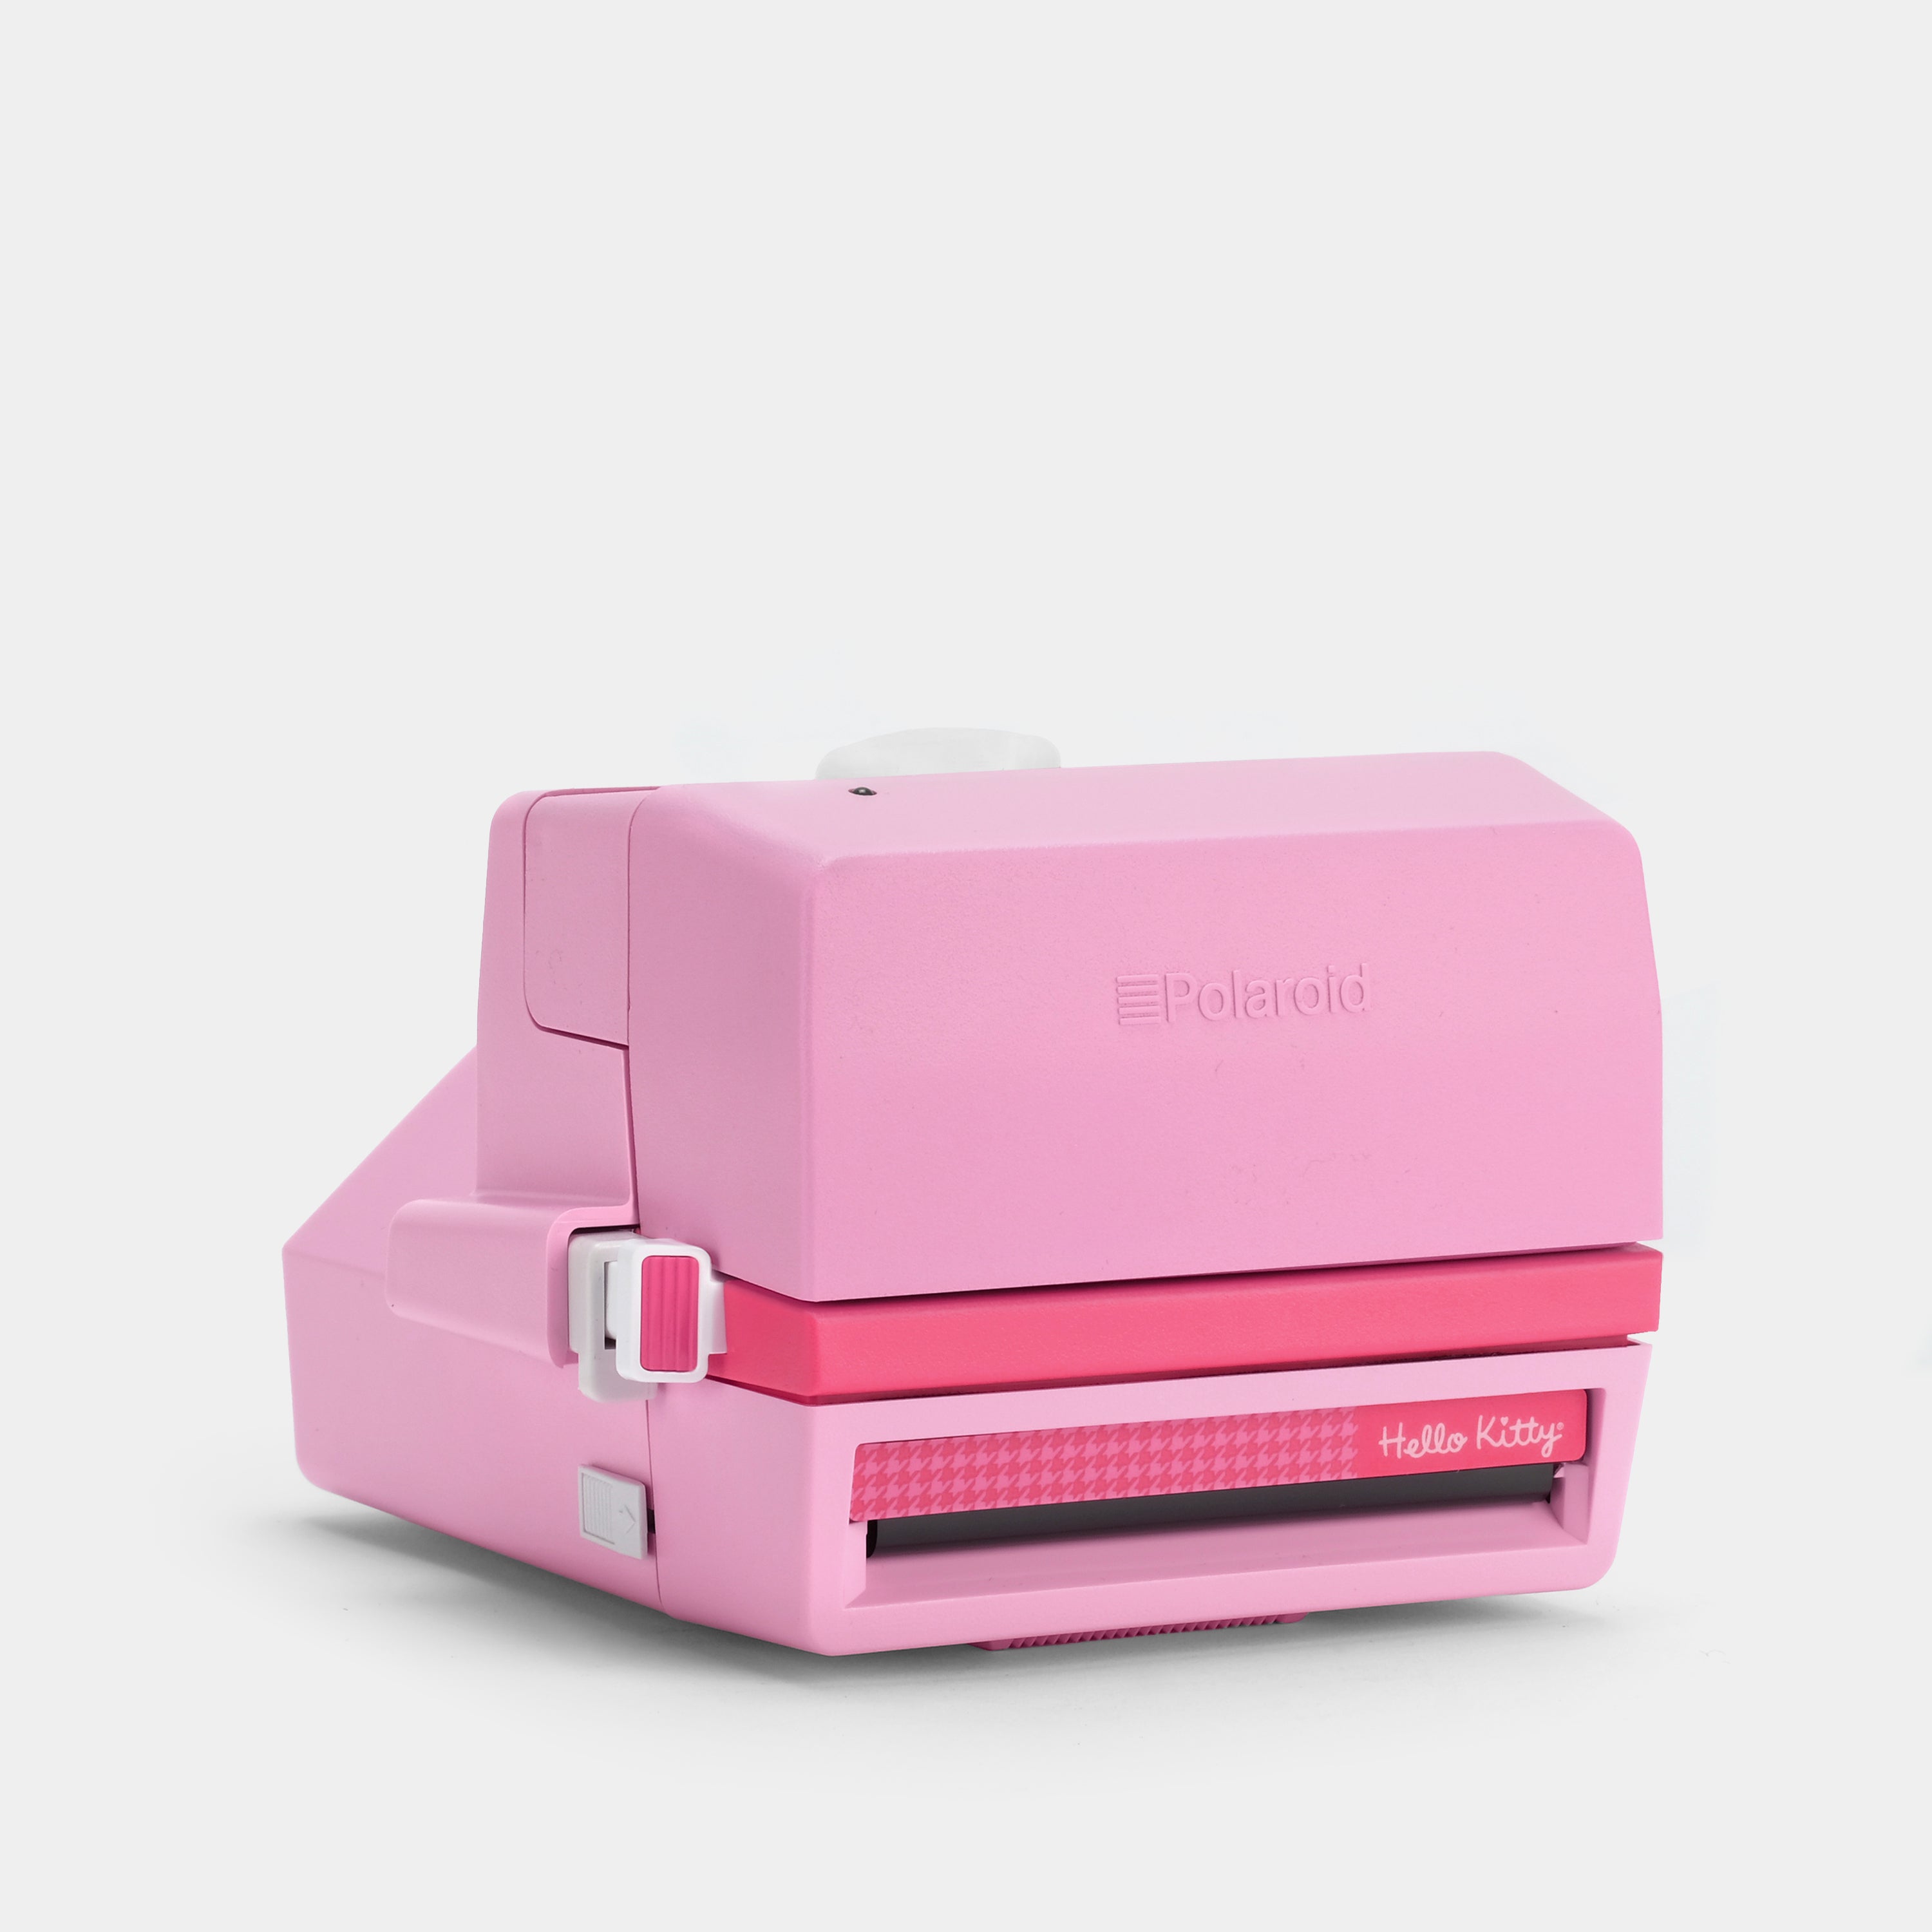 Polaroid 600 Hello Kitty Perfectly Pink Instant Film Camera